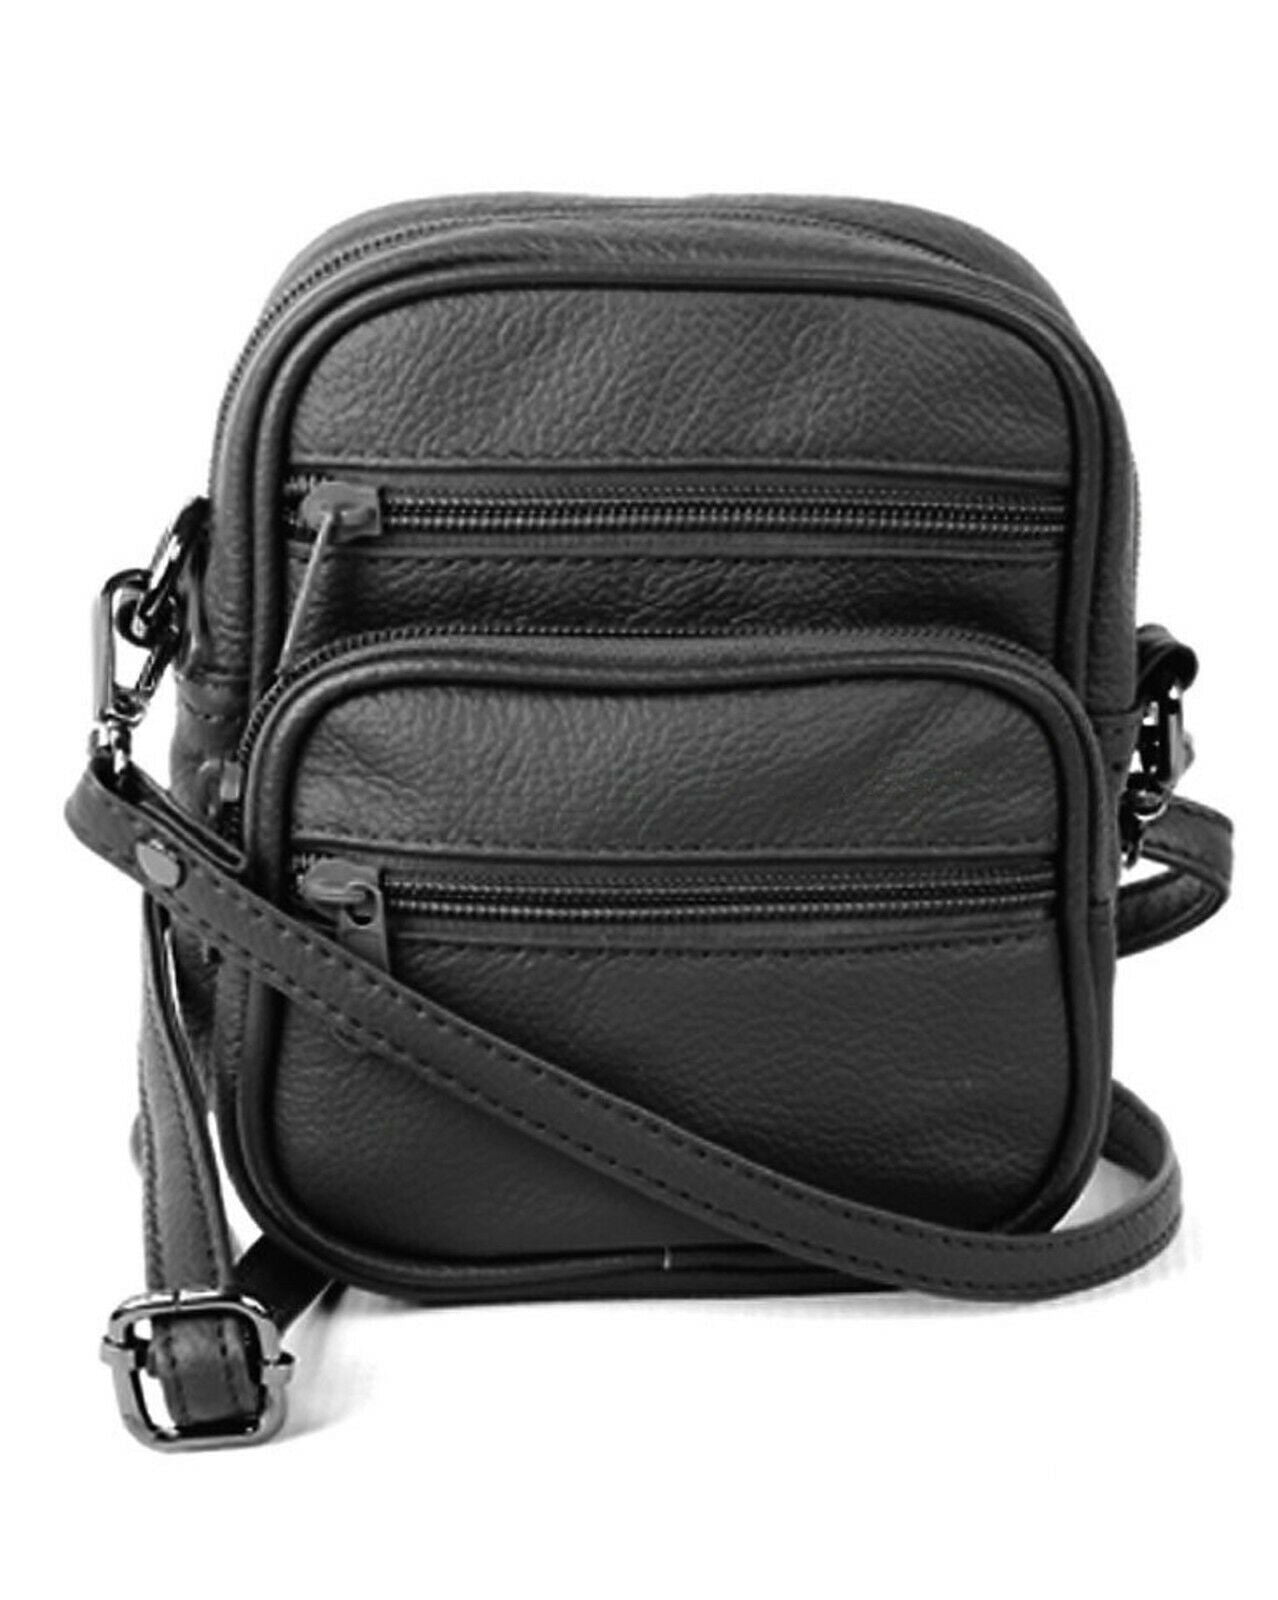 Studded Black Leather Hip Purse, Motorcycle Belt Loop Bag